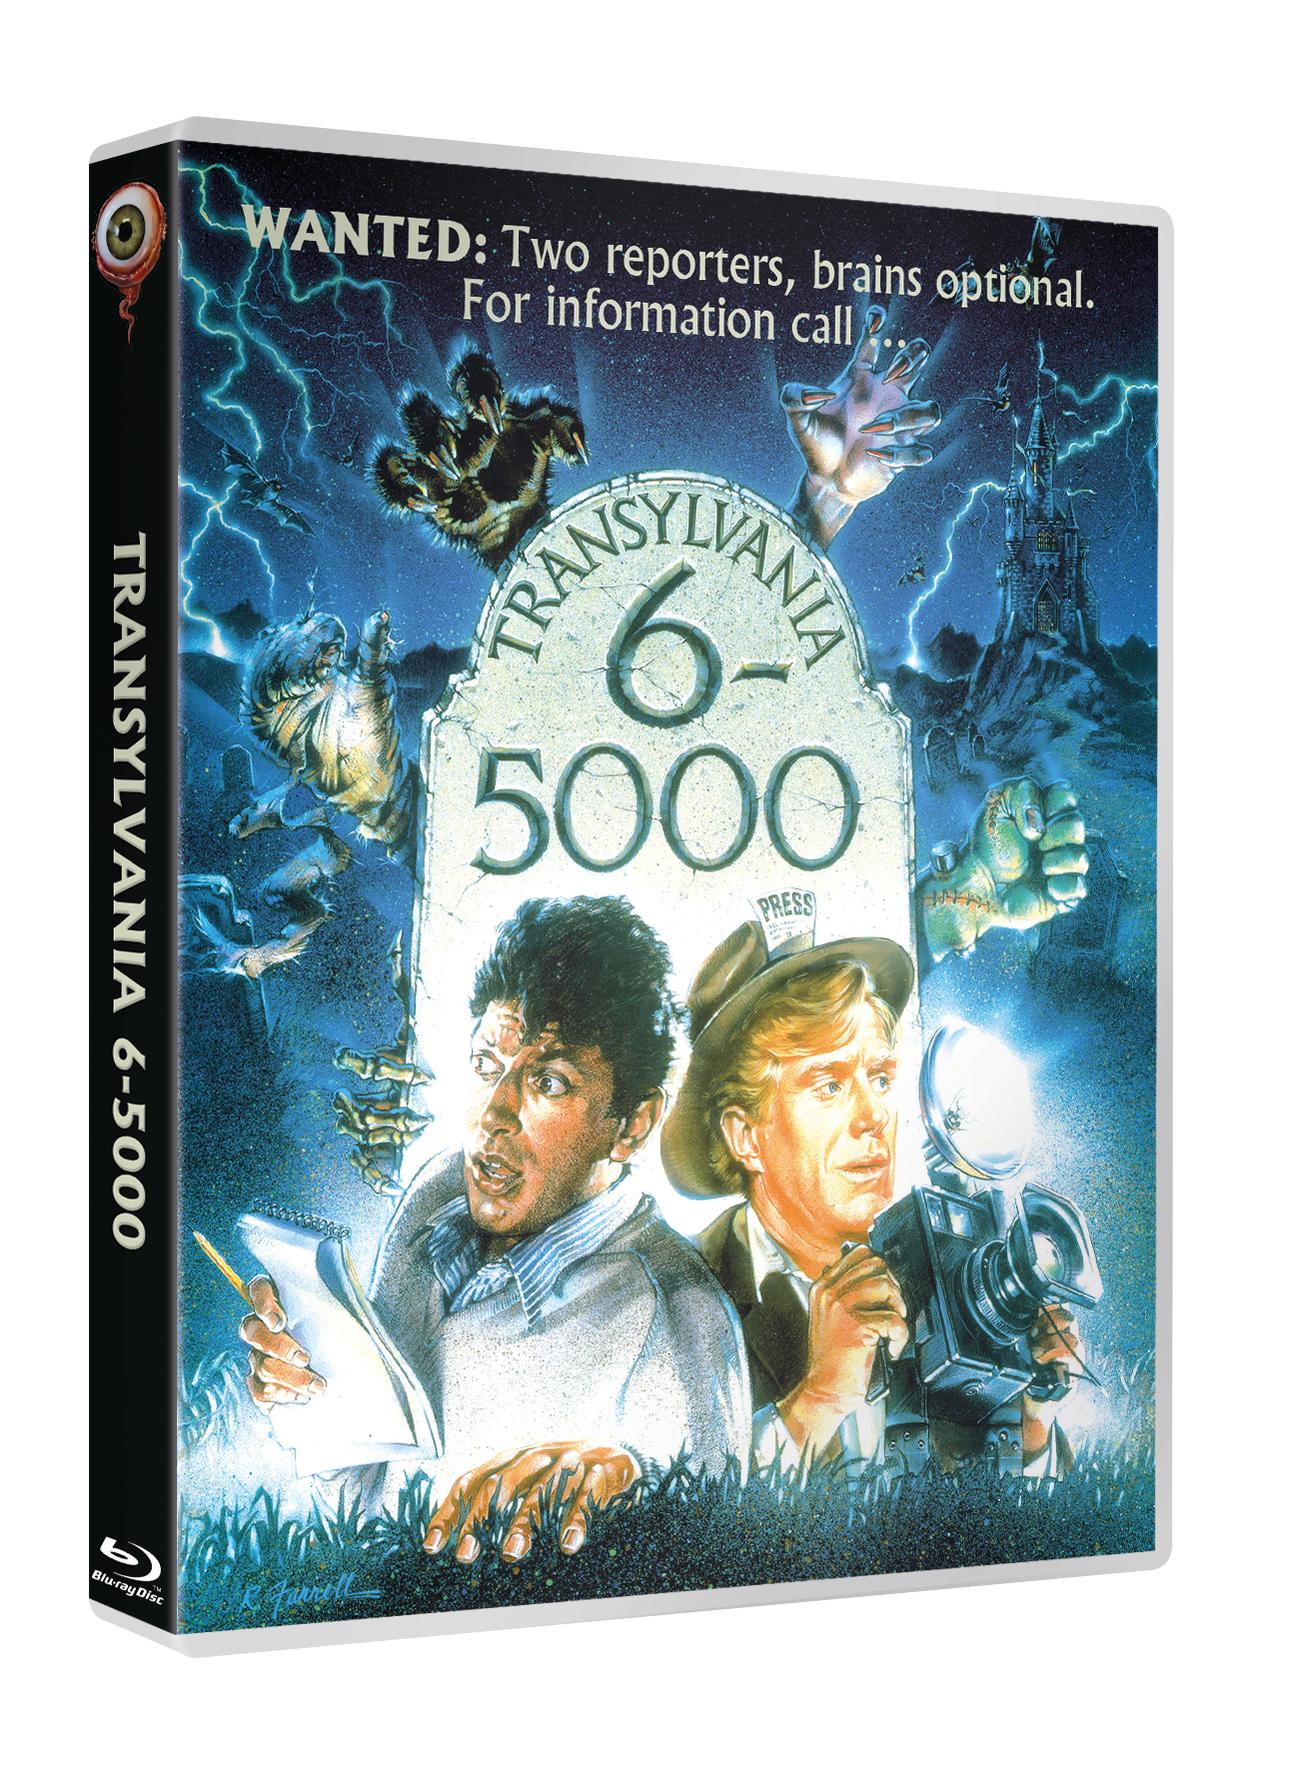 Transylvania 6-5000 Blu-ray + DVD